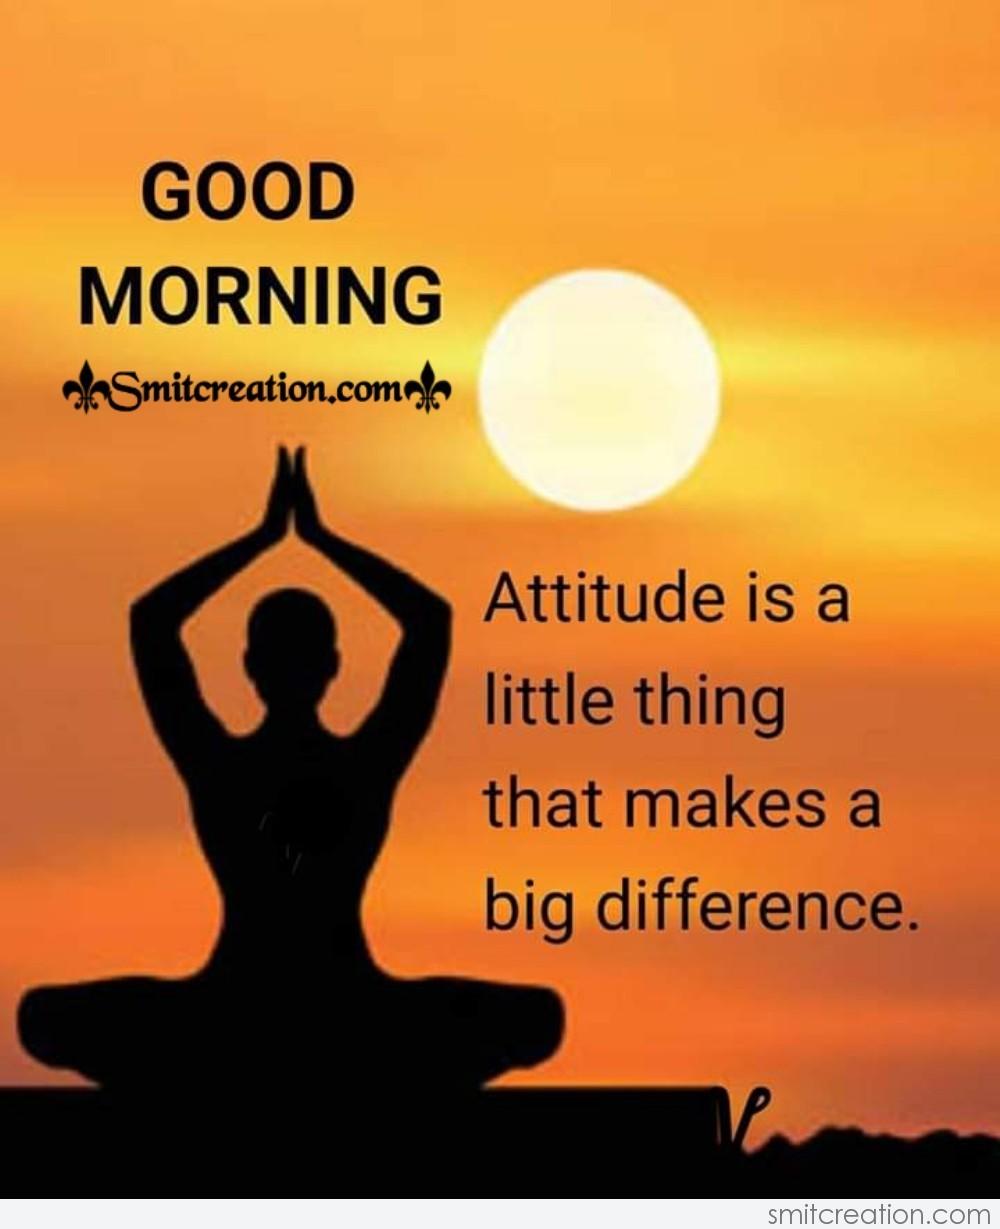 Good Morning Thought On Attitude - SmitCreation.com